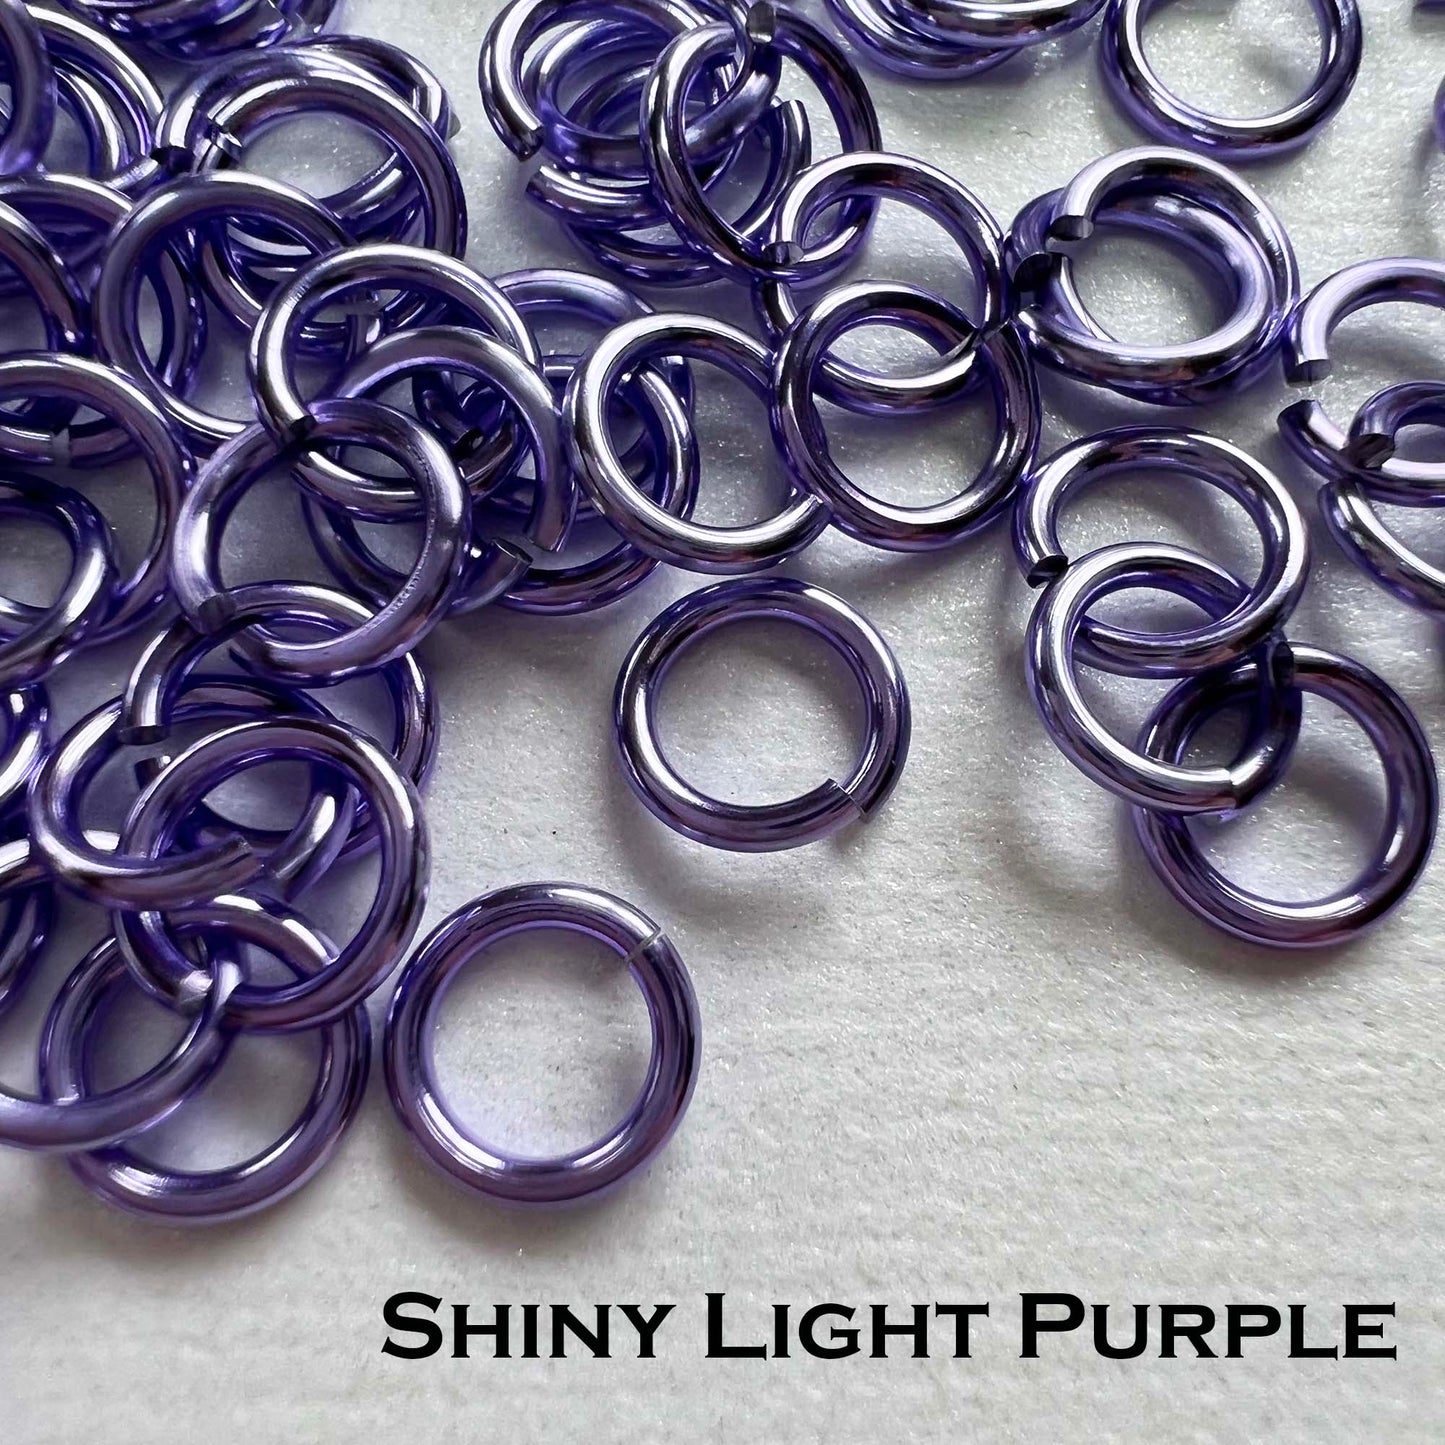 18g 3/16" Jump Rings Shiny (SWG) ID: 5mm - choose color & quantity